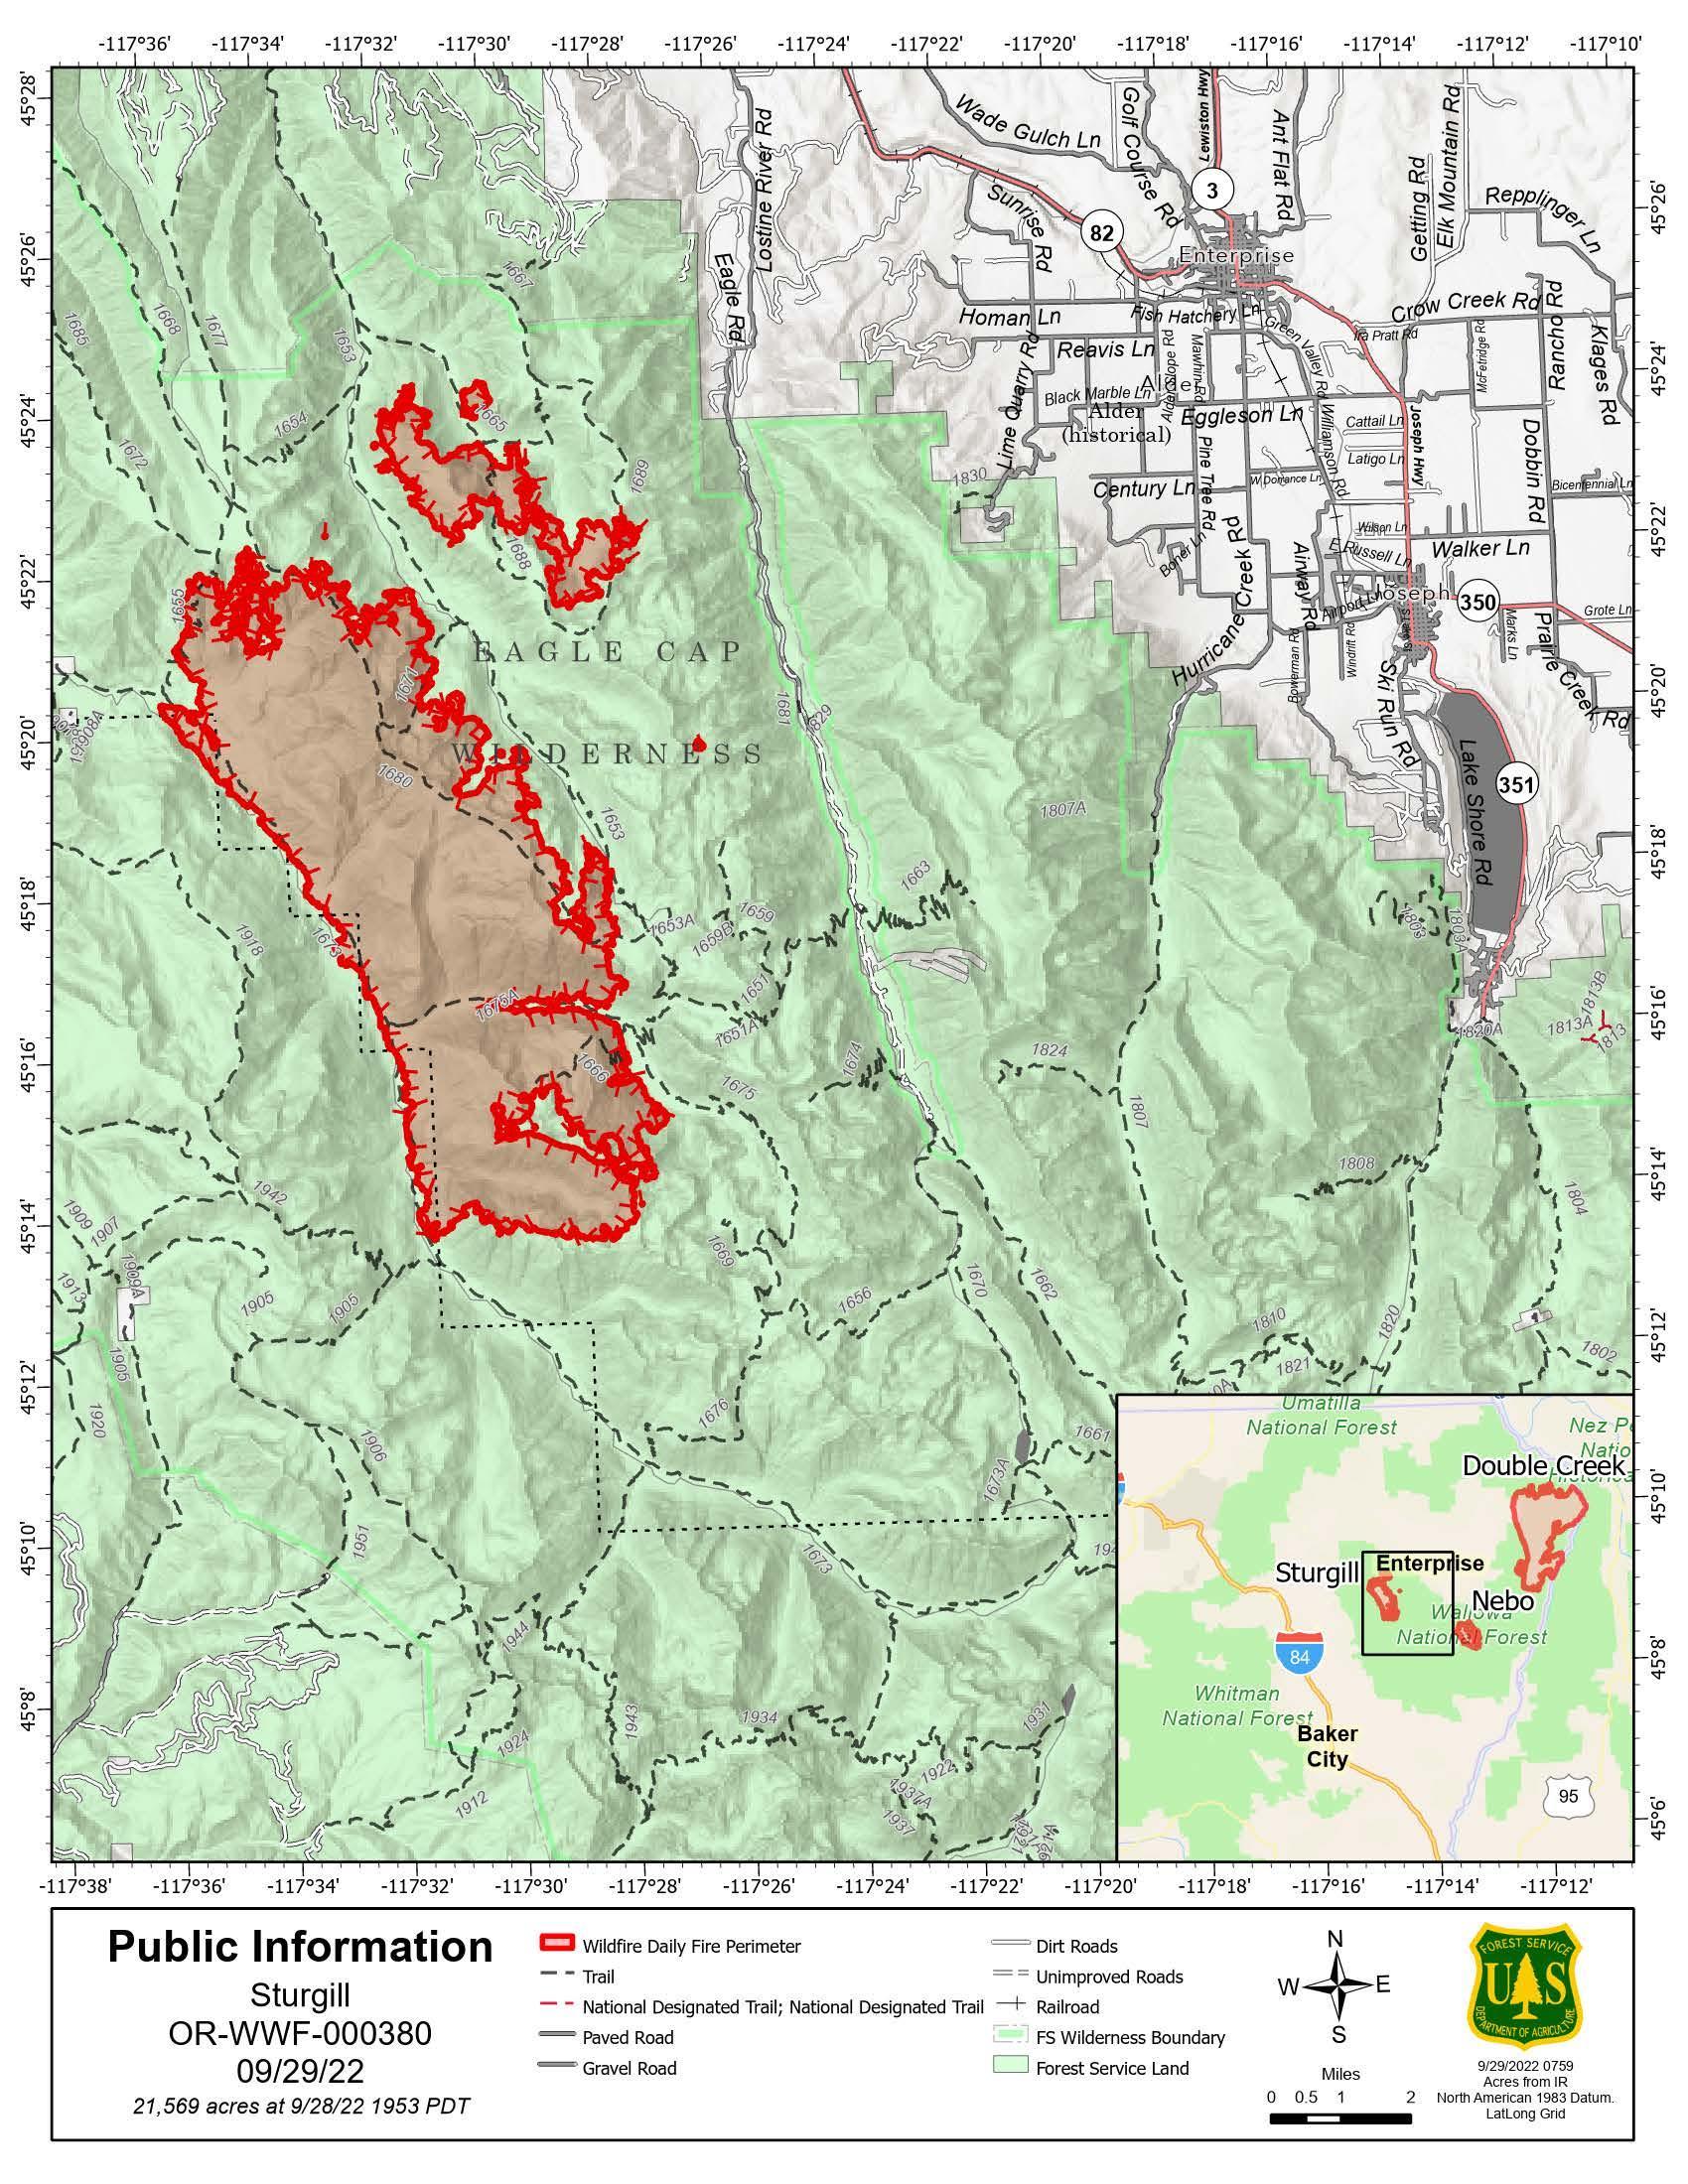 Goat Mountain 2 Fire Map - 09/29/2022